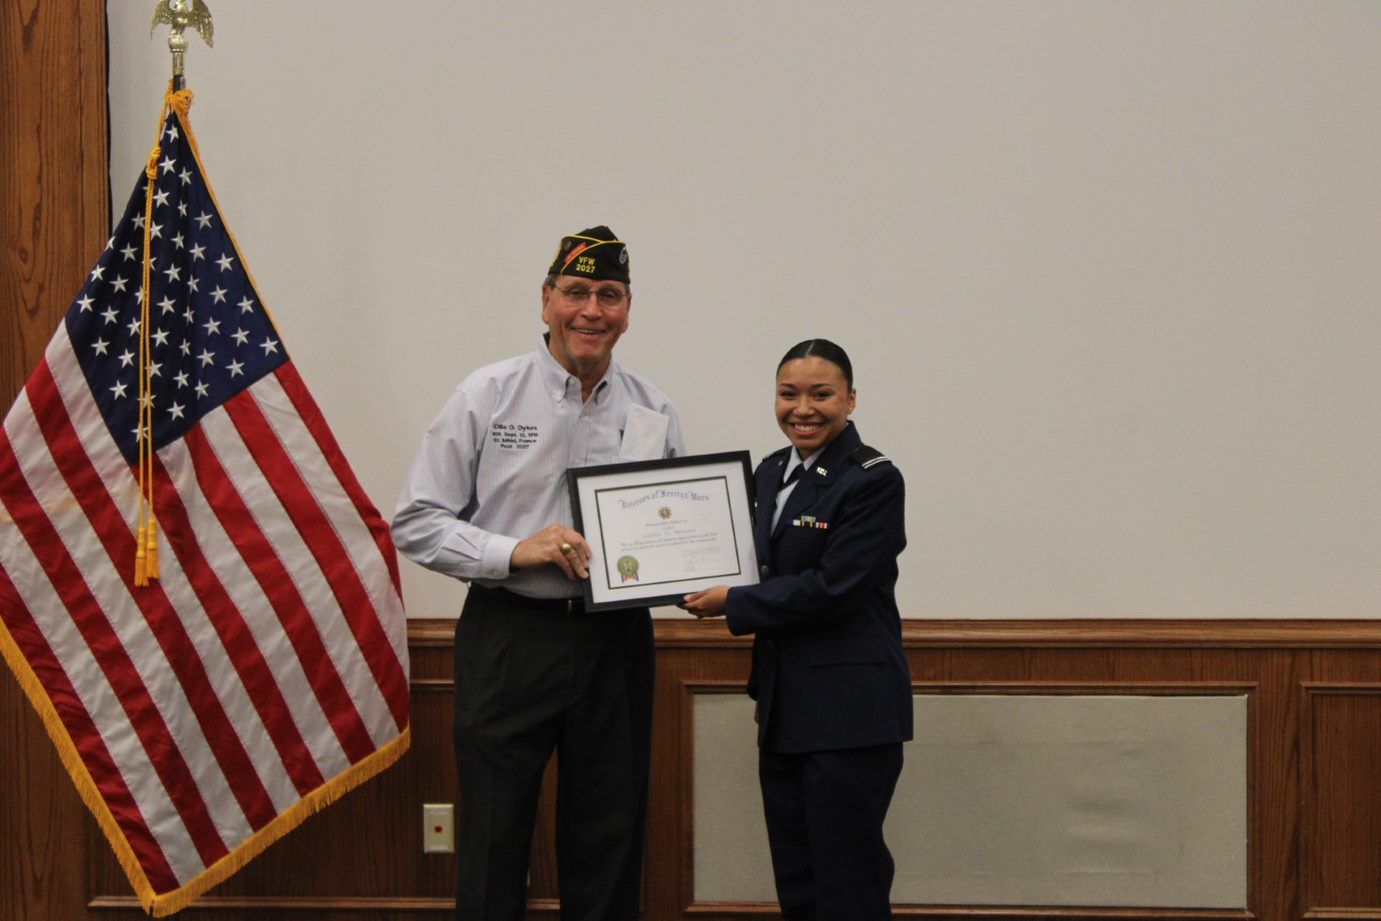 Cadet Isabella Shinsako
Oklahoma State University, Air Force ROTC
VFW Post 2027 Cadet of The Year
